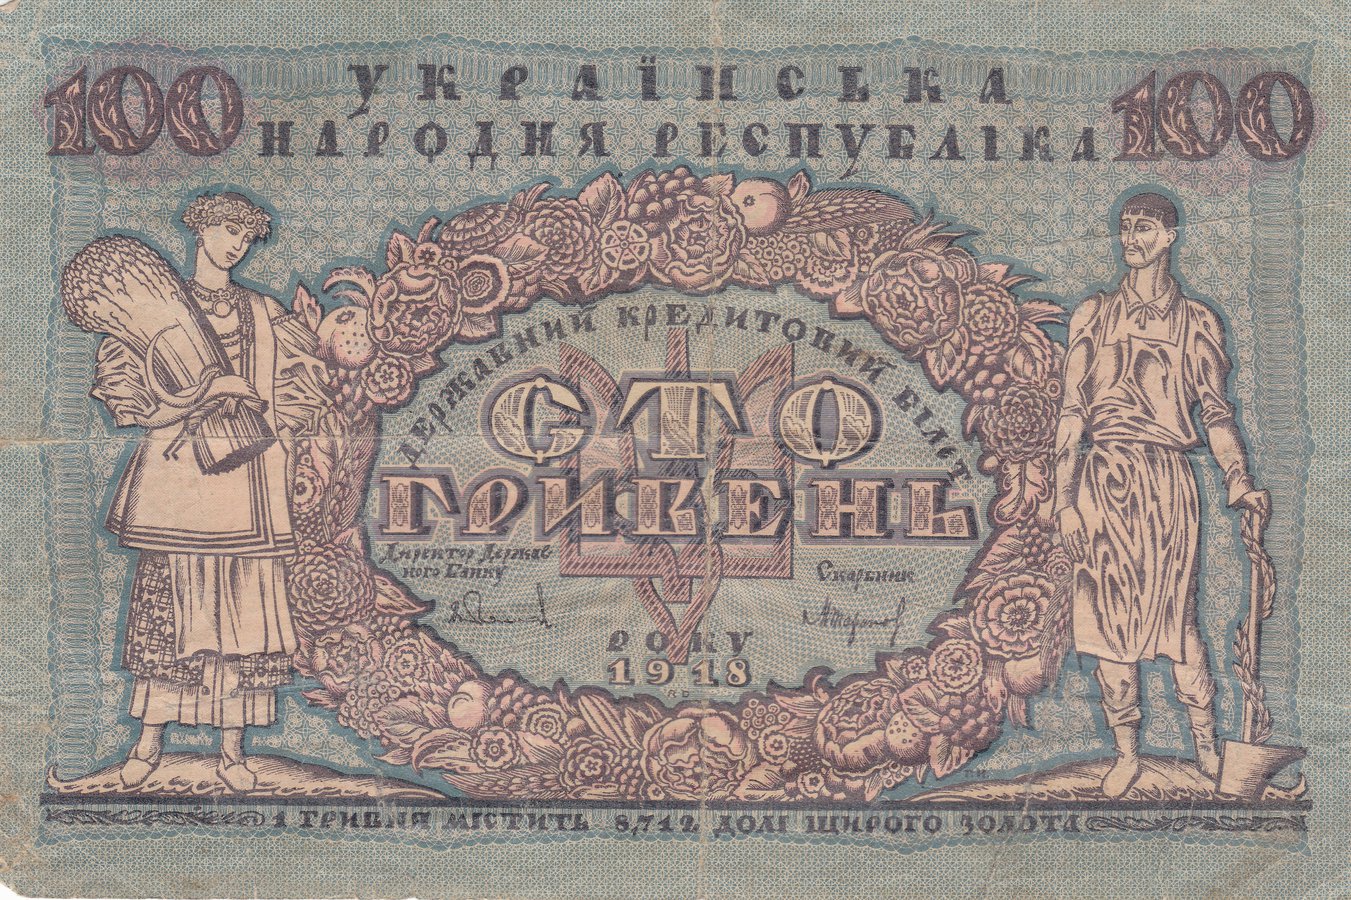 Ukrainian_100_hryvnia's_note_of_the_People's_repub.jlic_of_Ukraine_(1918)_front_side.jpg